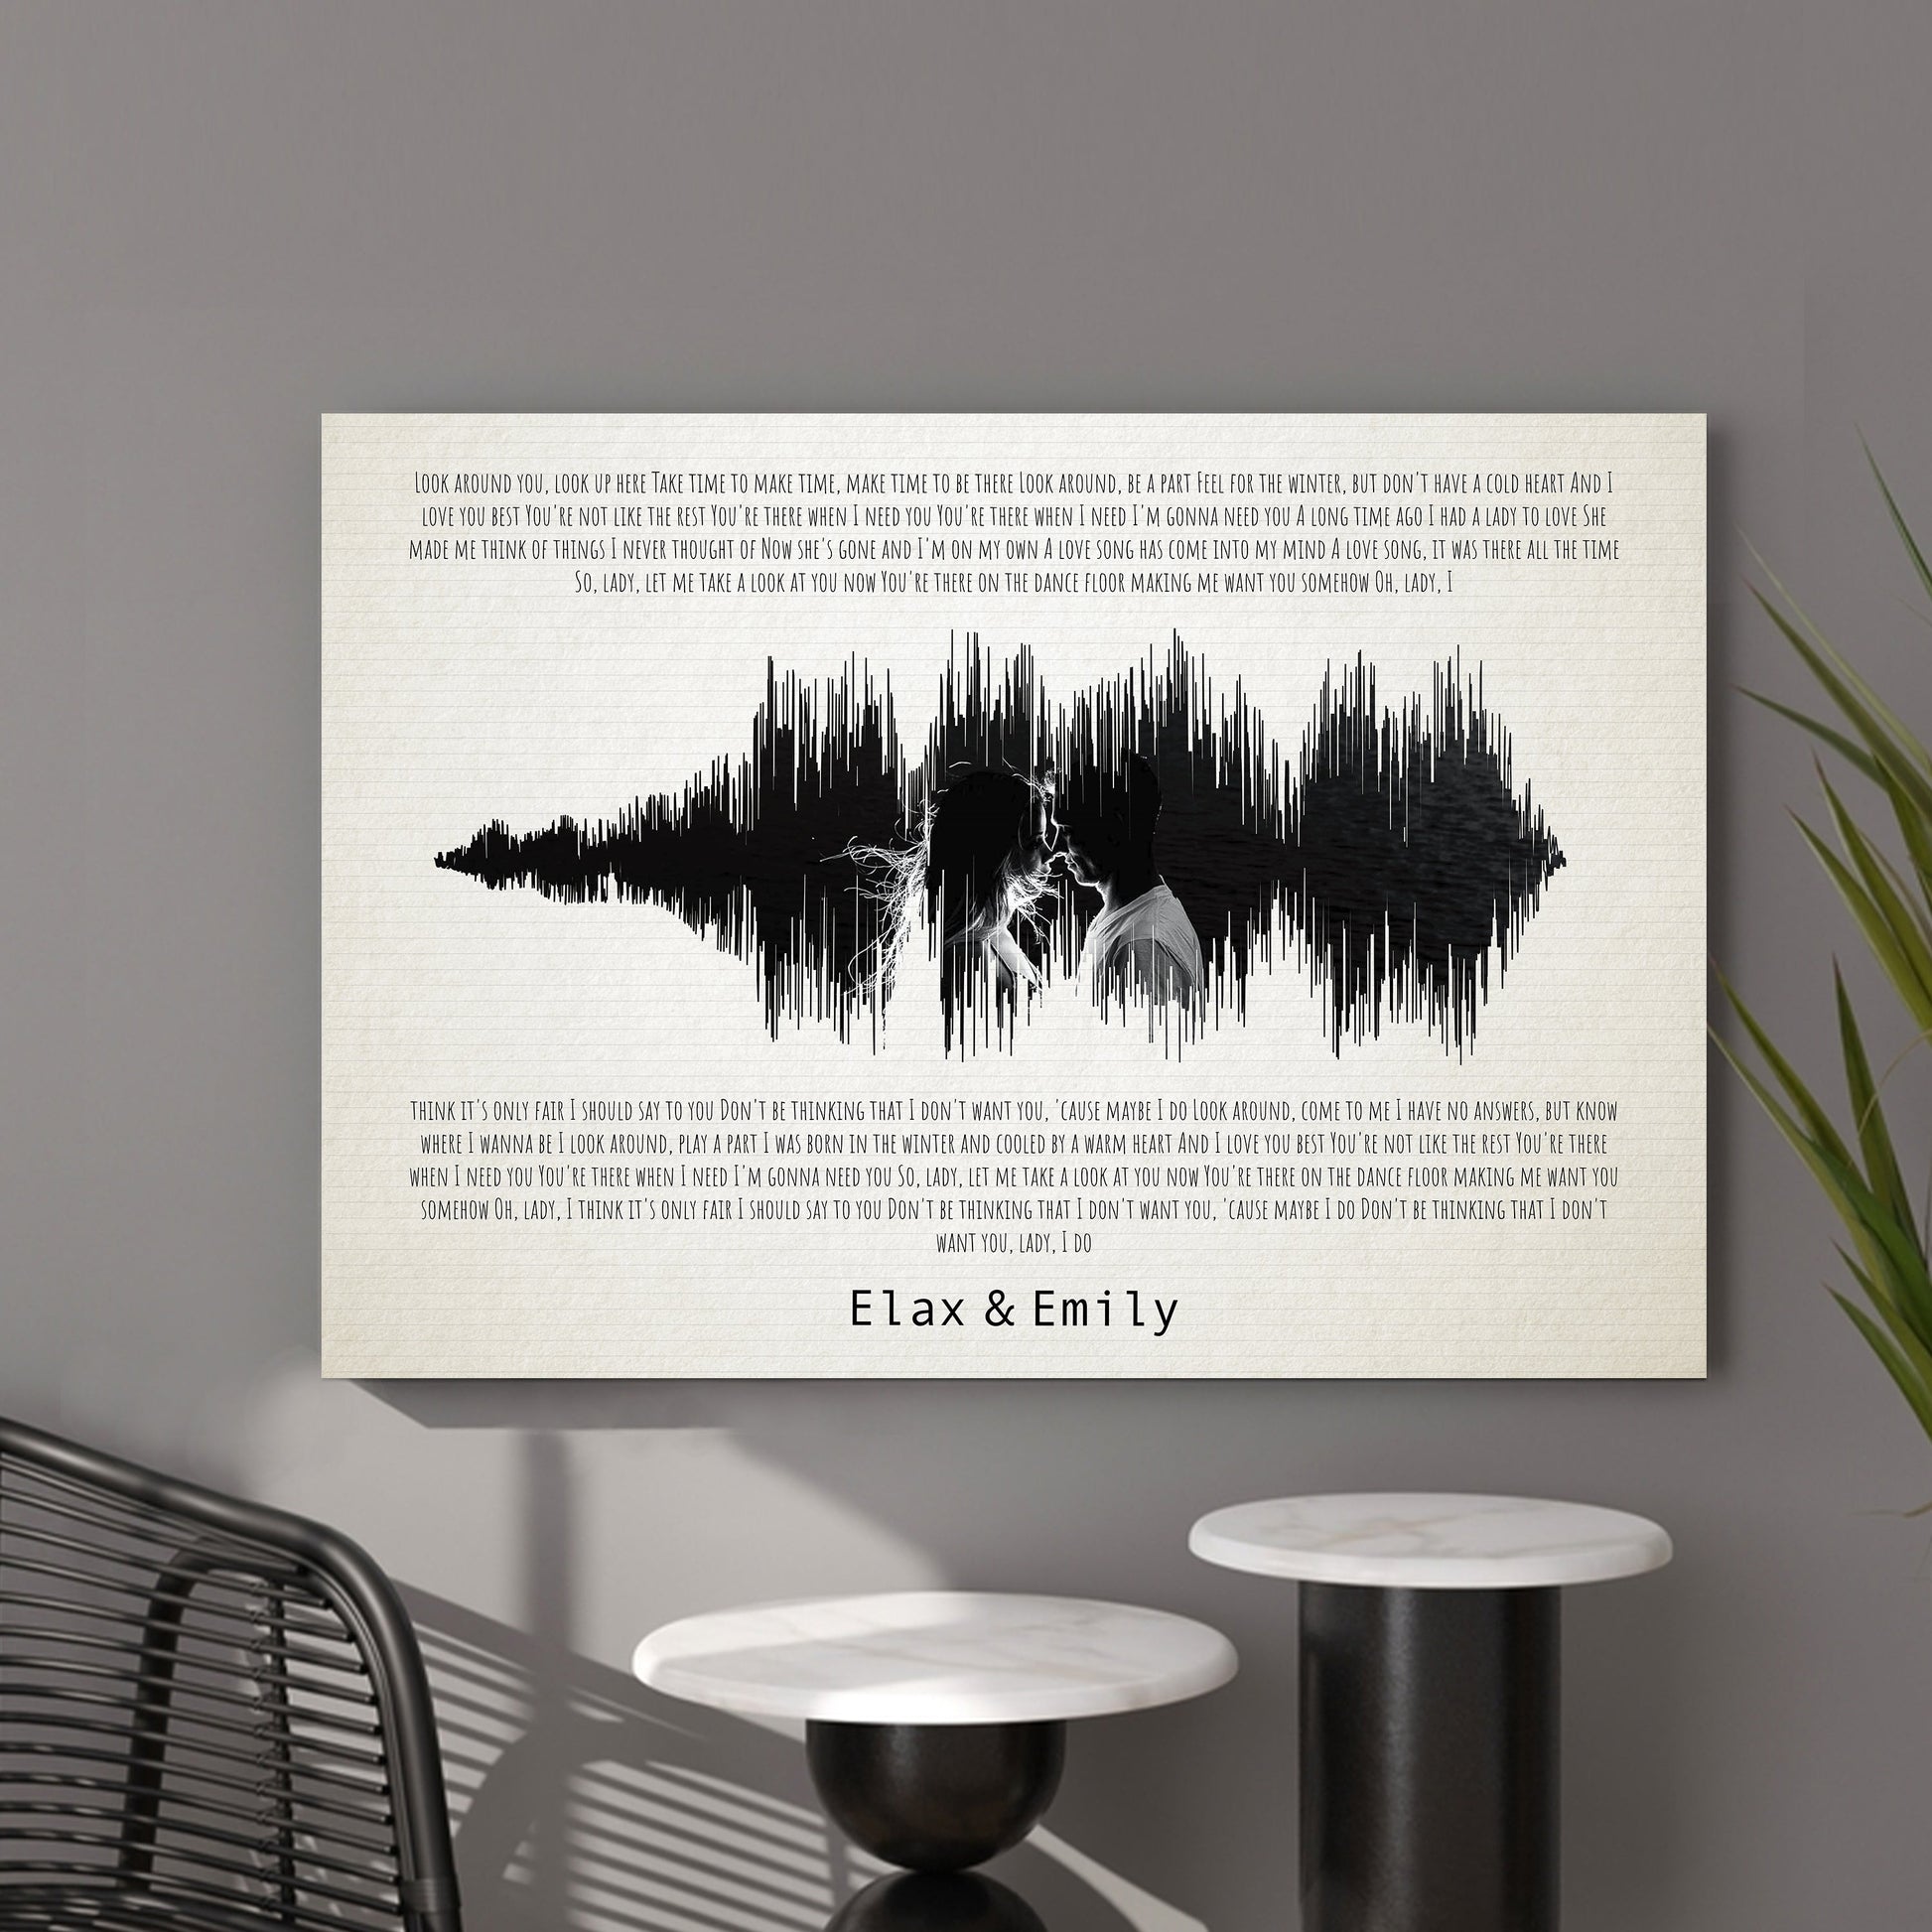 Custom soundwave wall art: Song lyrics transformed into unique visual gift.